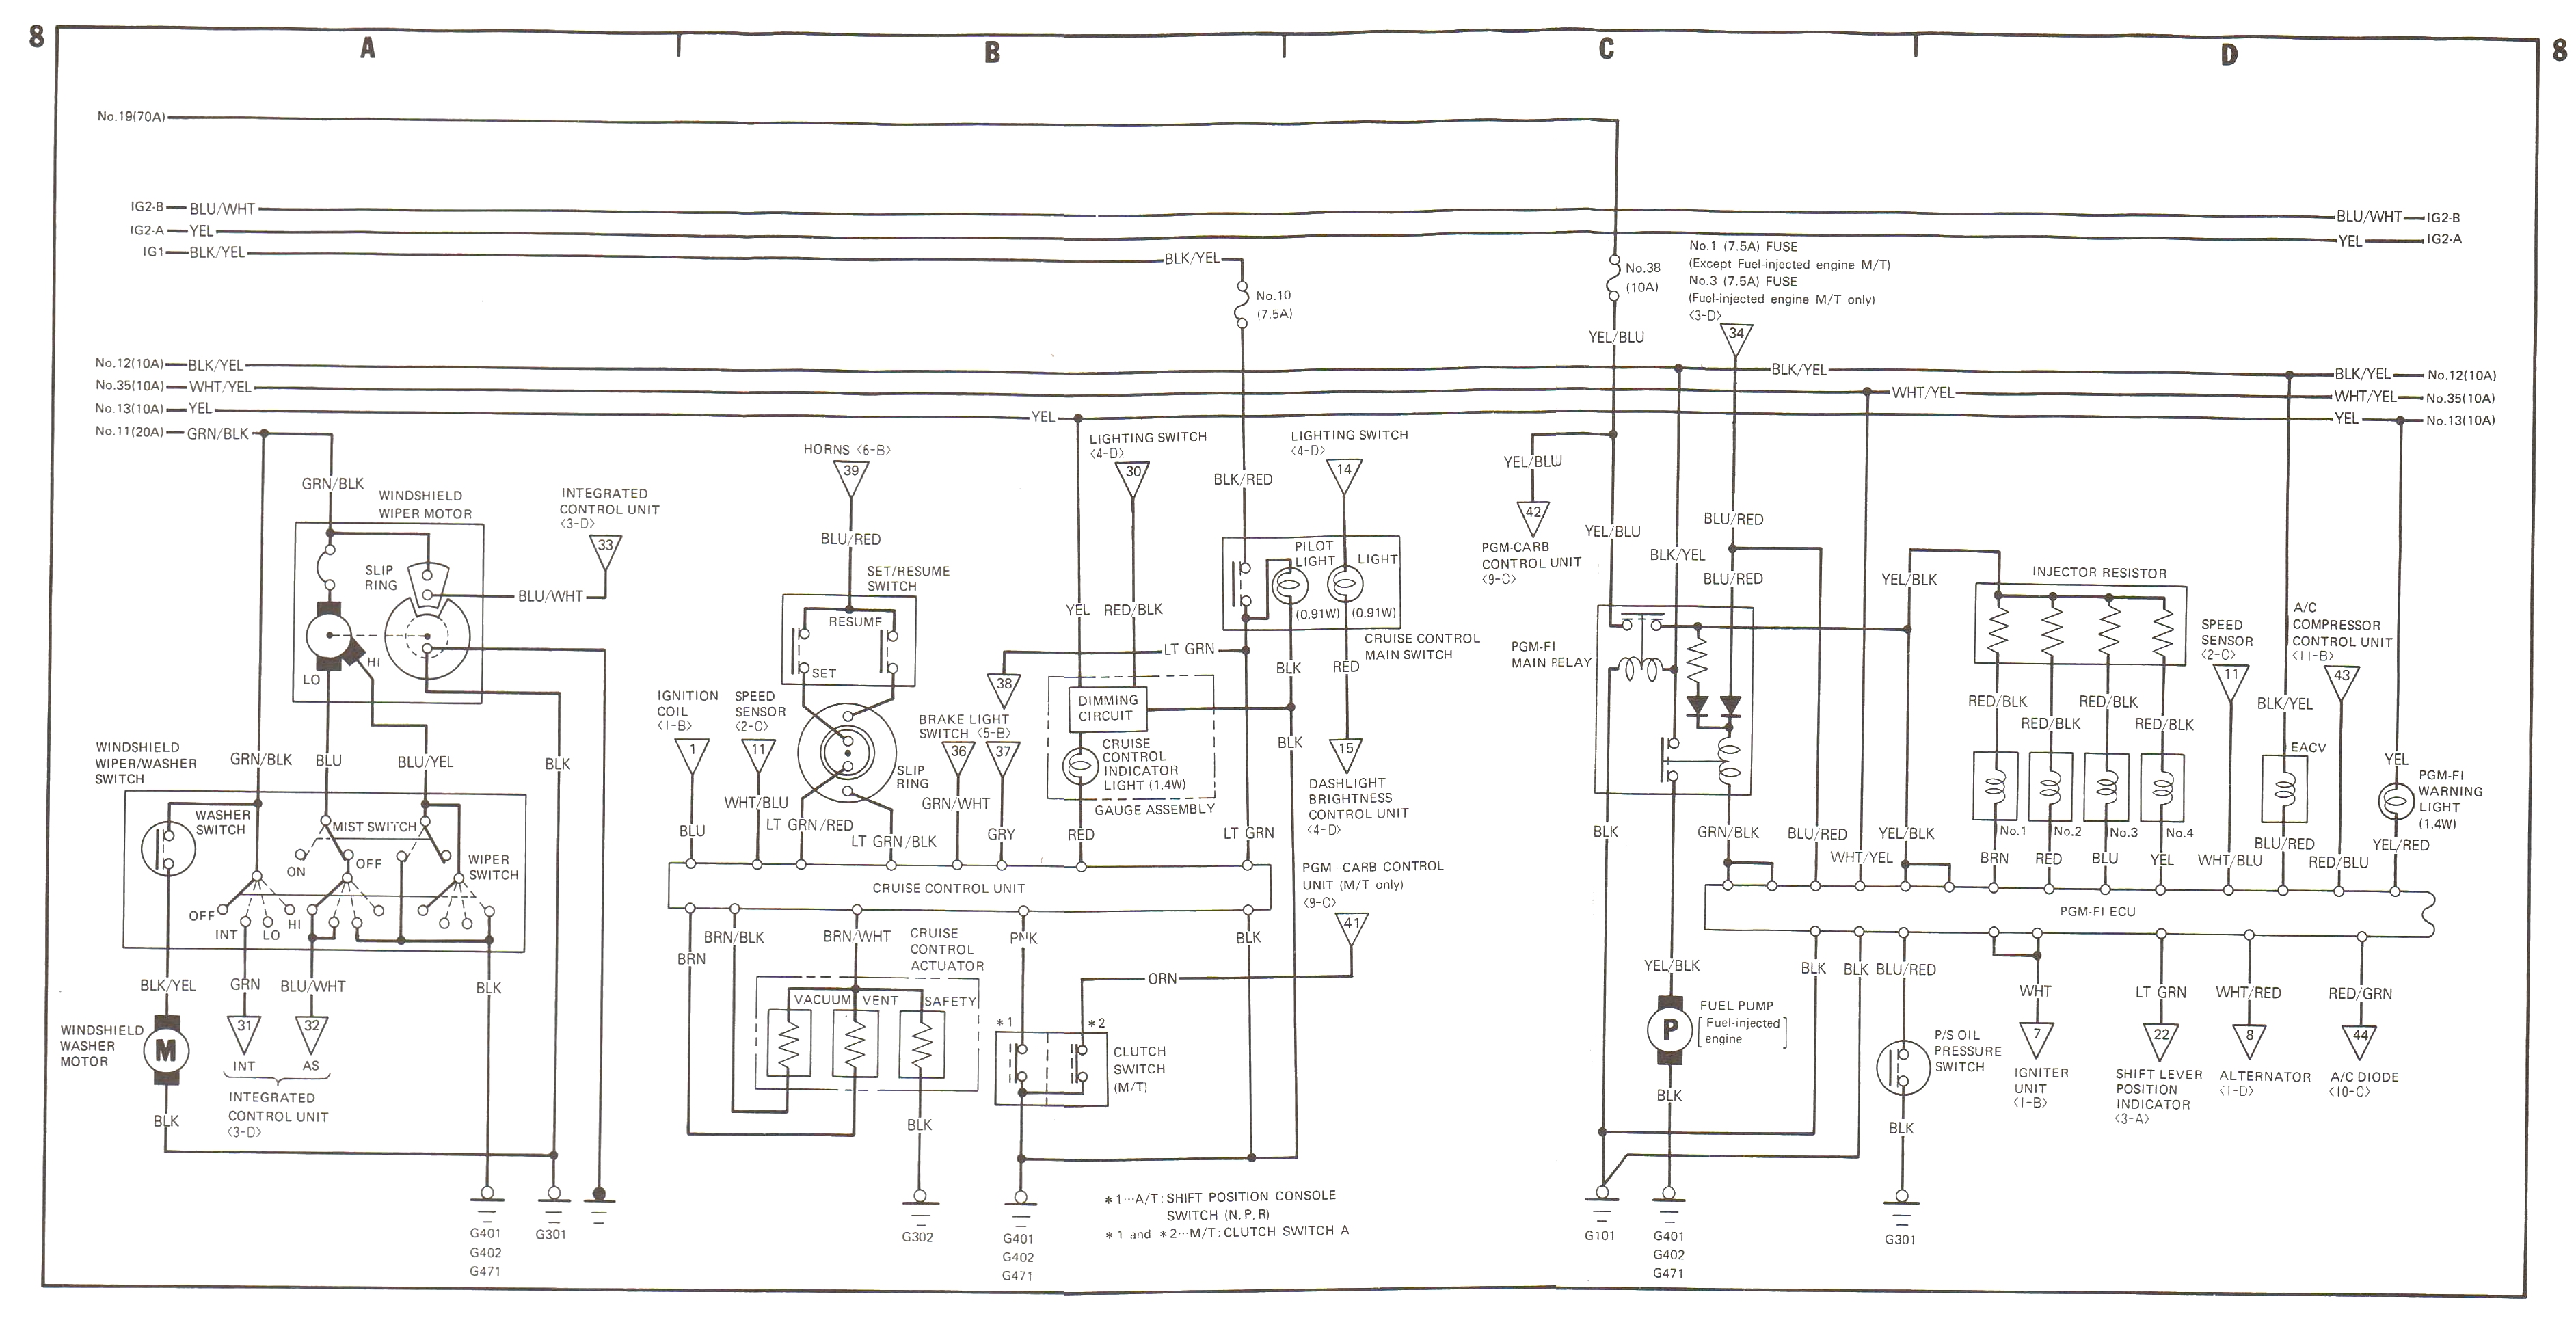 88-89 Wiring Diagrams